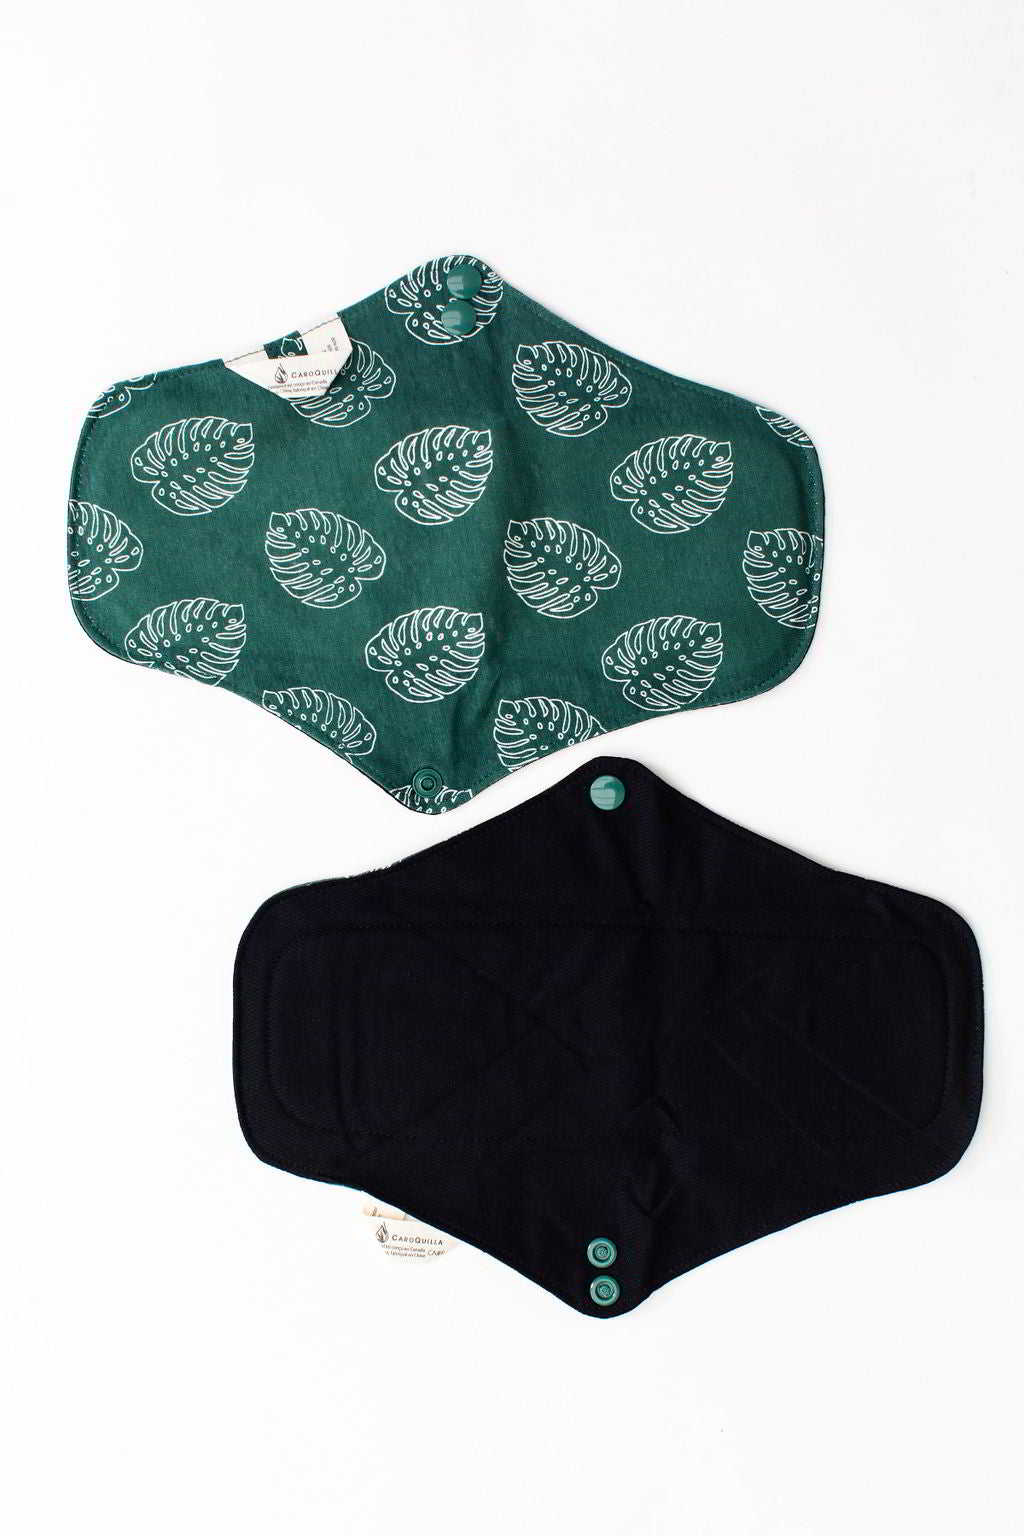 First Kickstarter Campaign! CaroQuilla Bamboo Underwear : r/kickstarter